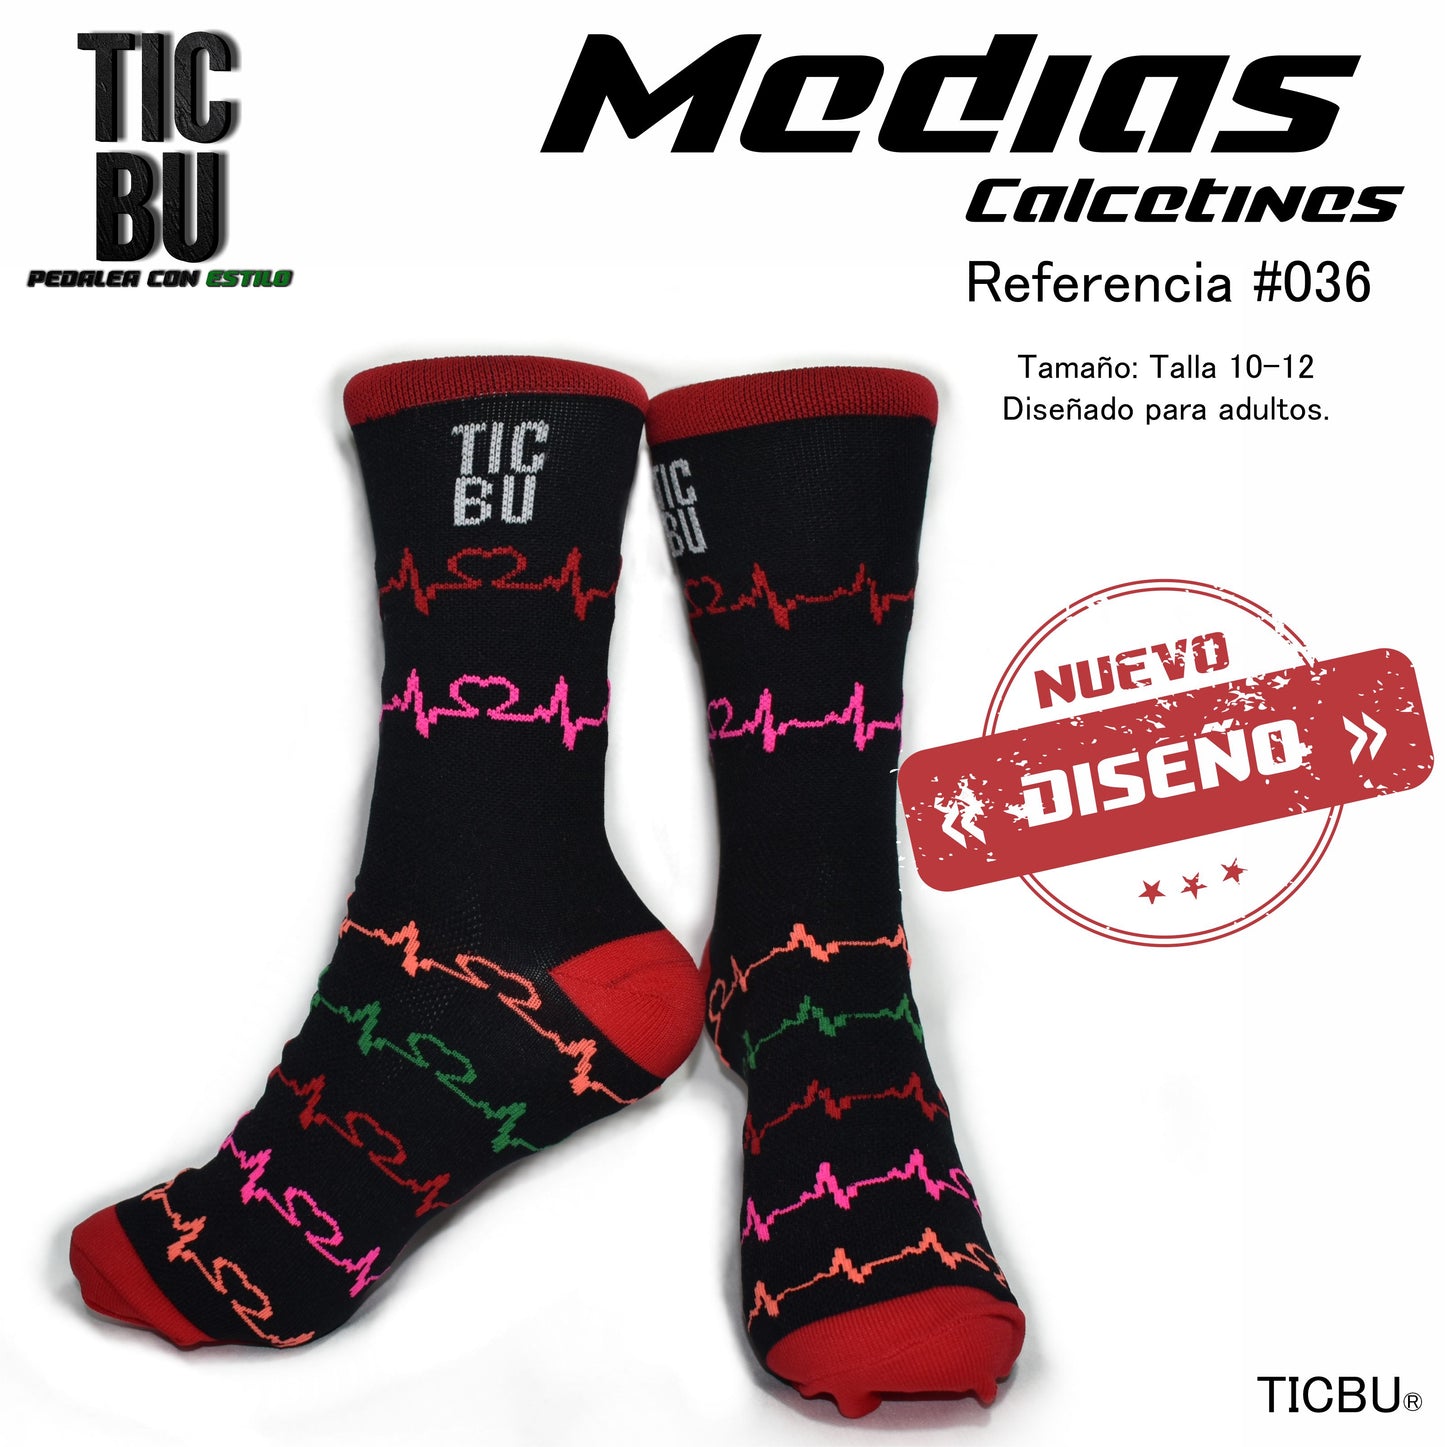 TICBU socks Ref 036